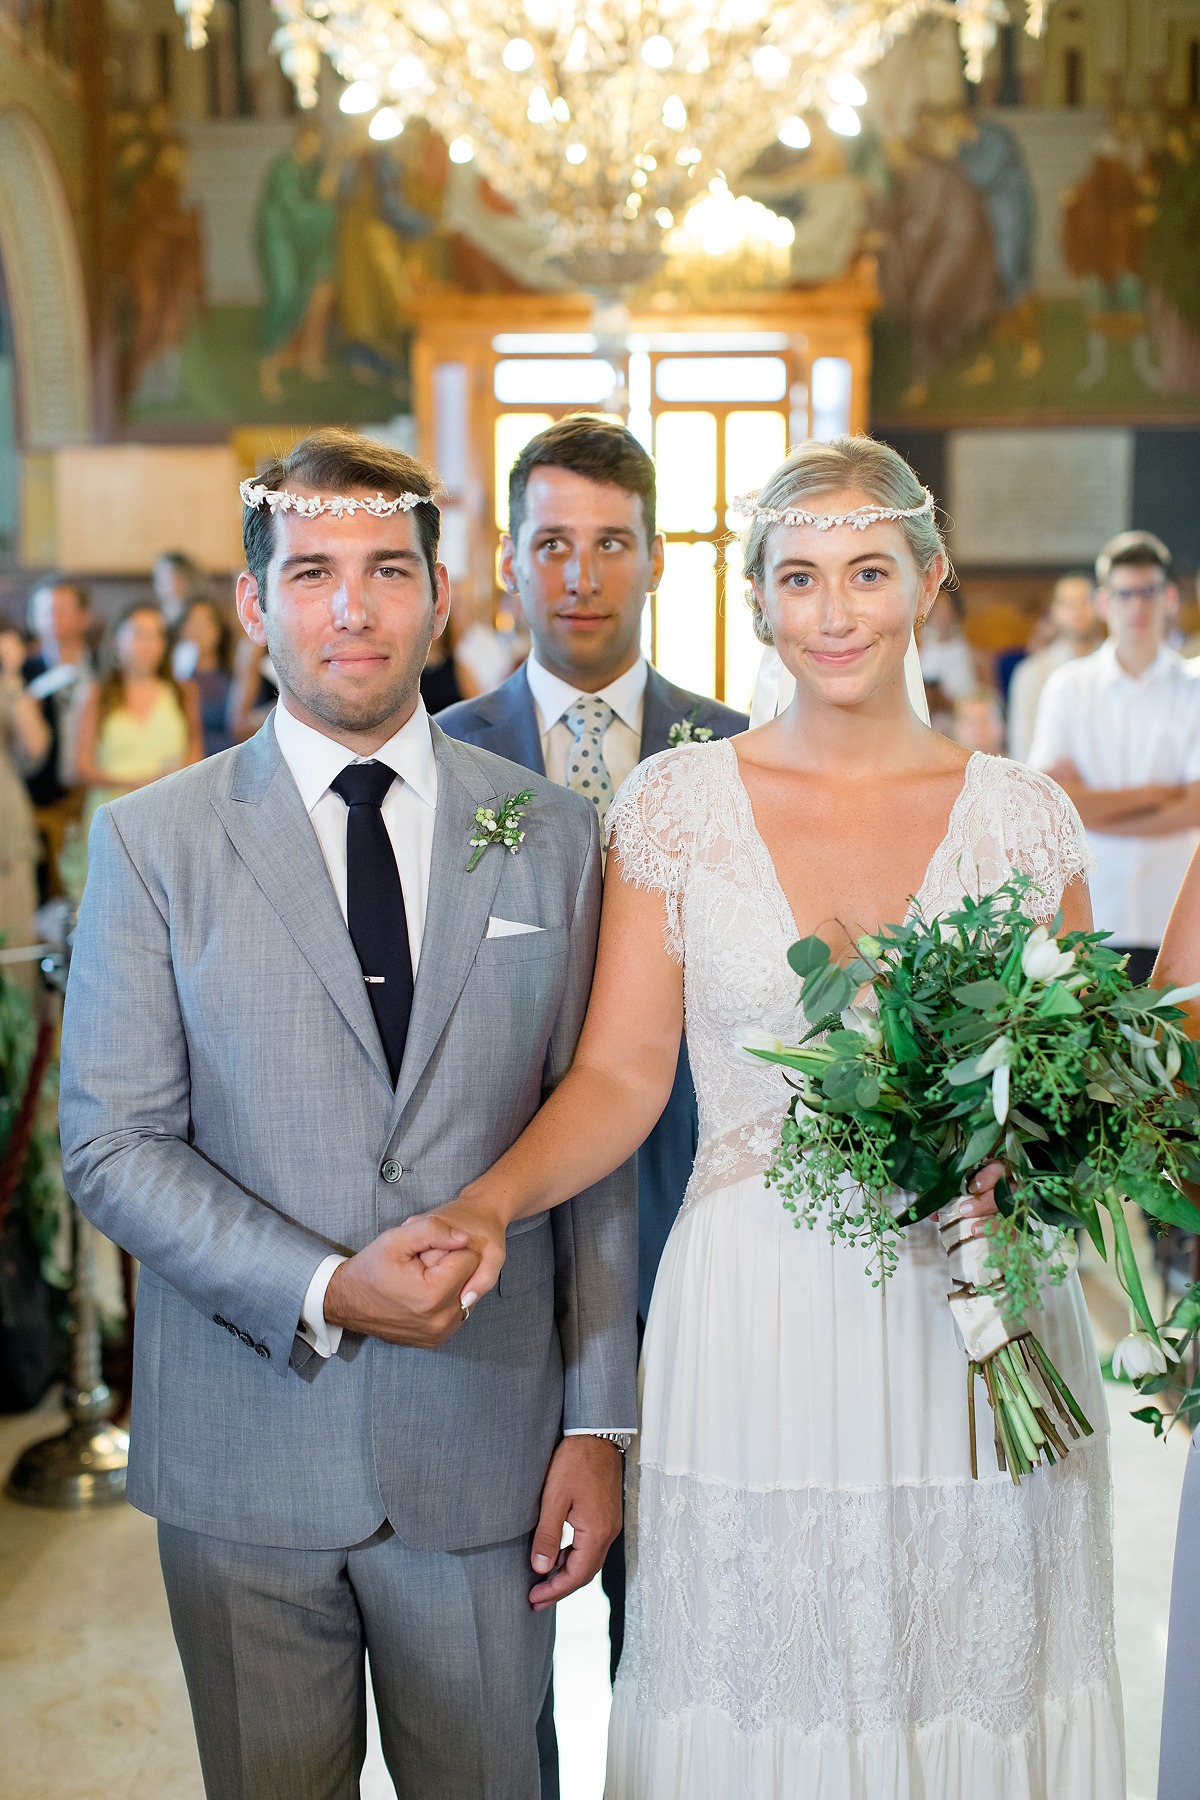 Getting married in Greece